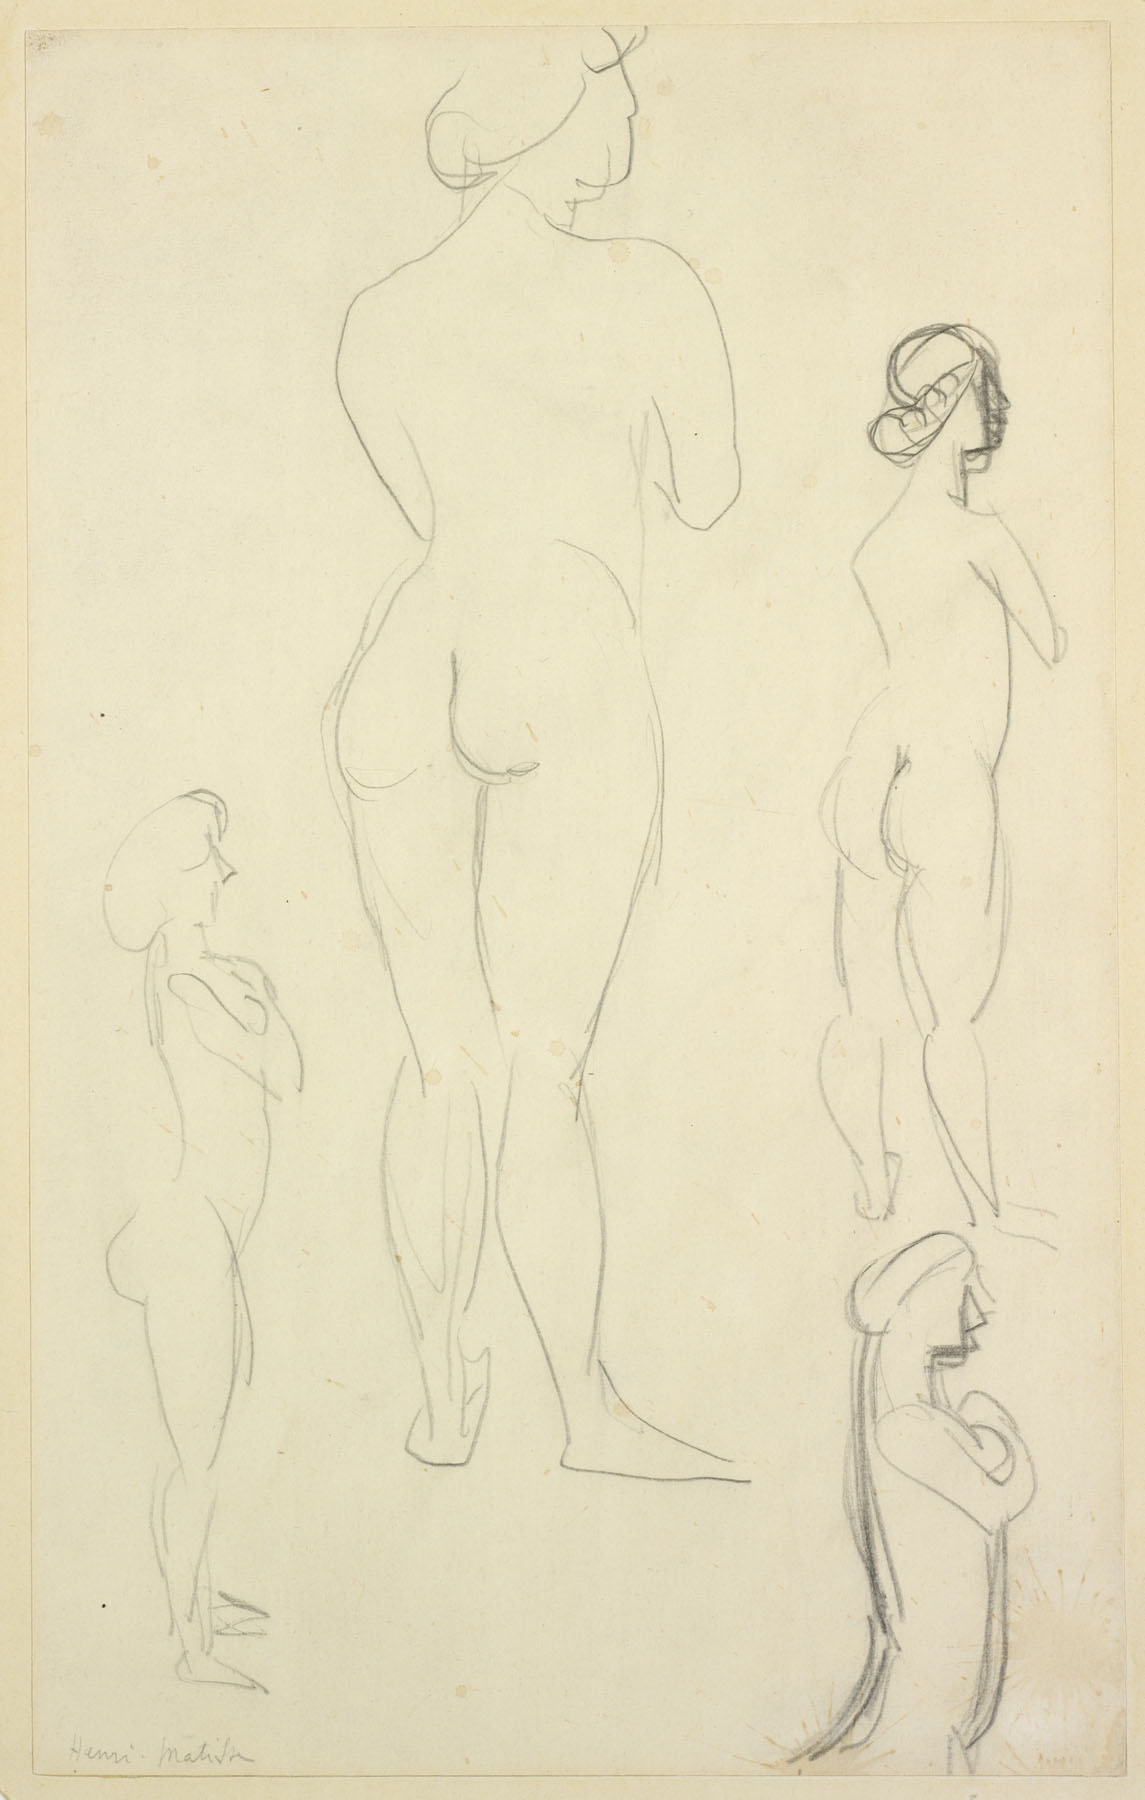 Henri Matisse, Four Studies of a Nude, ca. 1910. Crayon on wove paper. Gift of Mrs. Gustav Radeke, Museum of Art, Rhode Island School of Design, Providence, 22.296